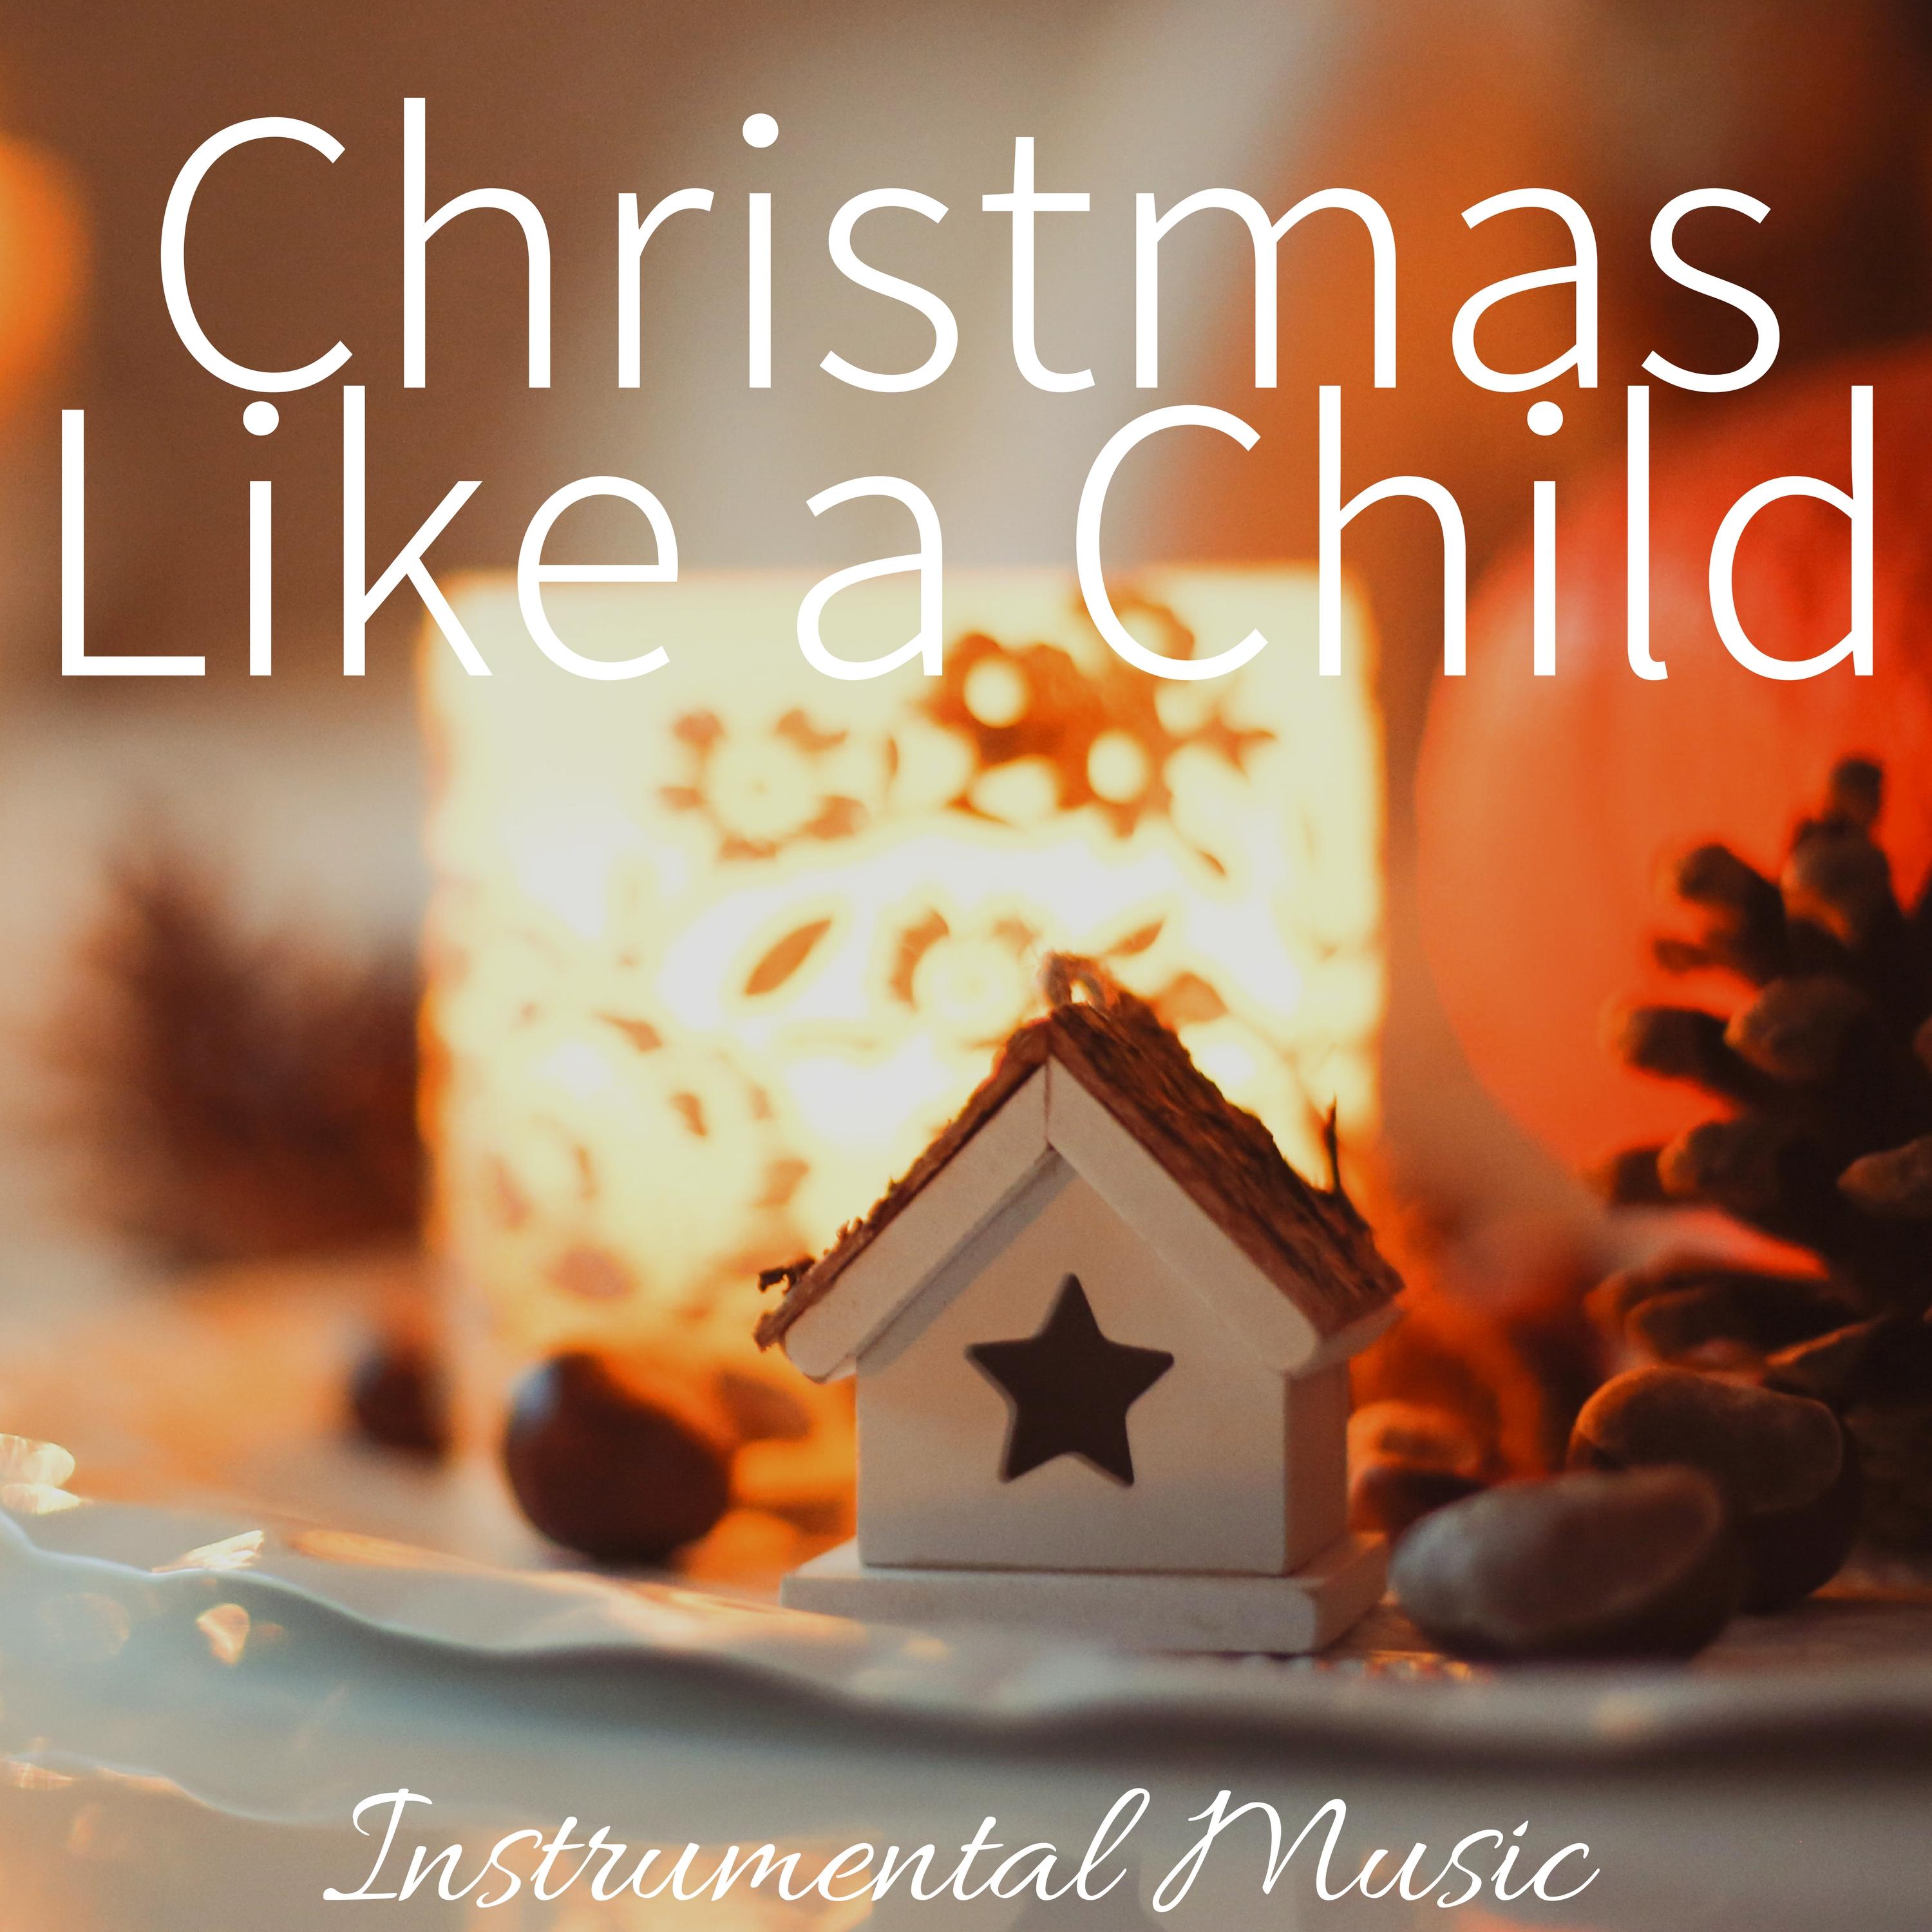 Christmas Like a Child: Instrumental Music for Christmas Ideas, Xmas Gifts, White Christmas 2017